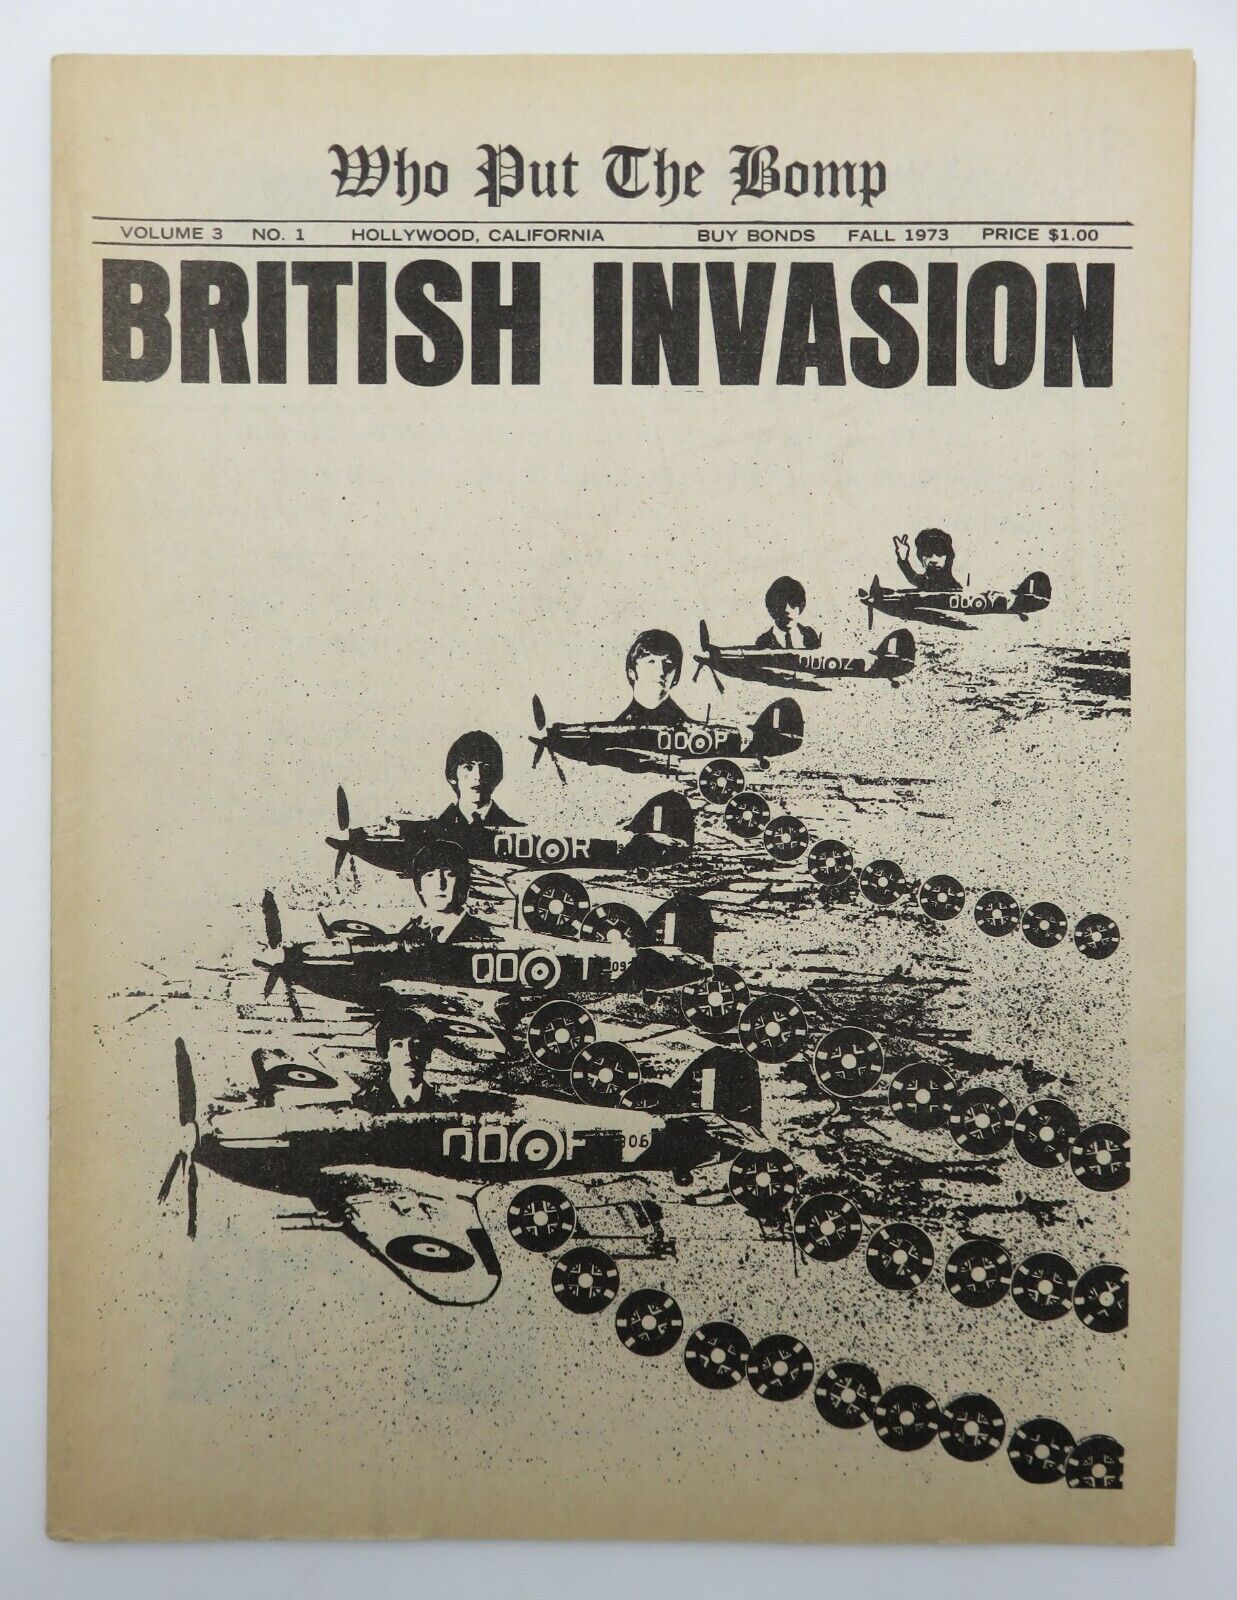 WHO PUT THE BOMP British Invasion Vol 3 No.1 (Fall 1973) Hollywood Music Fanzine